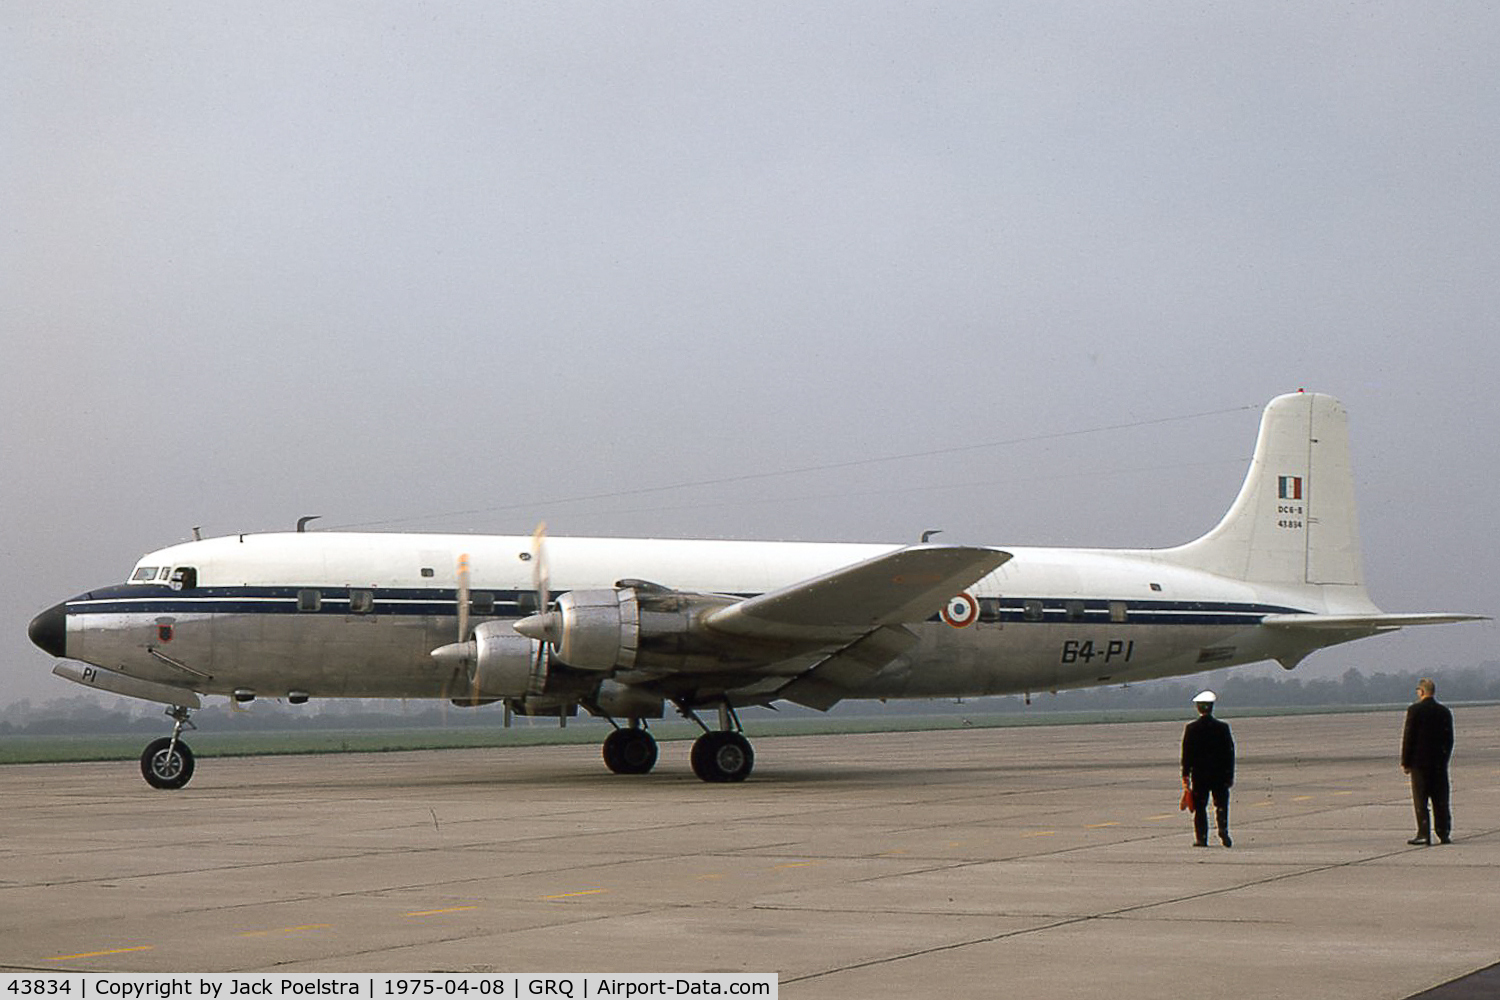 43834, 1953 Douglas DC-6B C/N 43834, 64-PI of 64 Escadre at Groningen airport